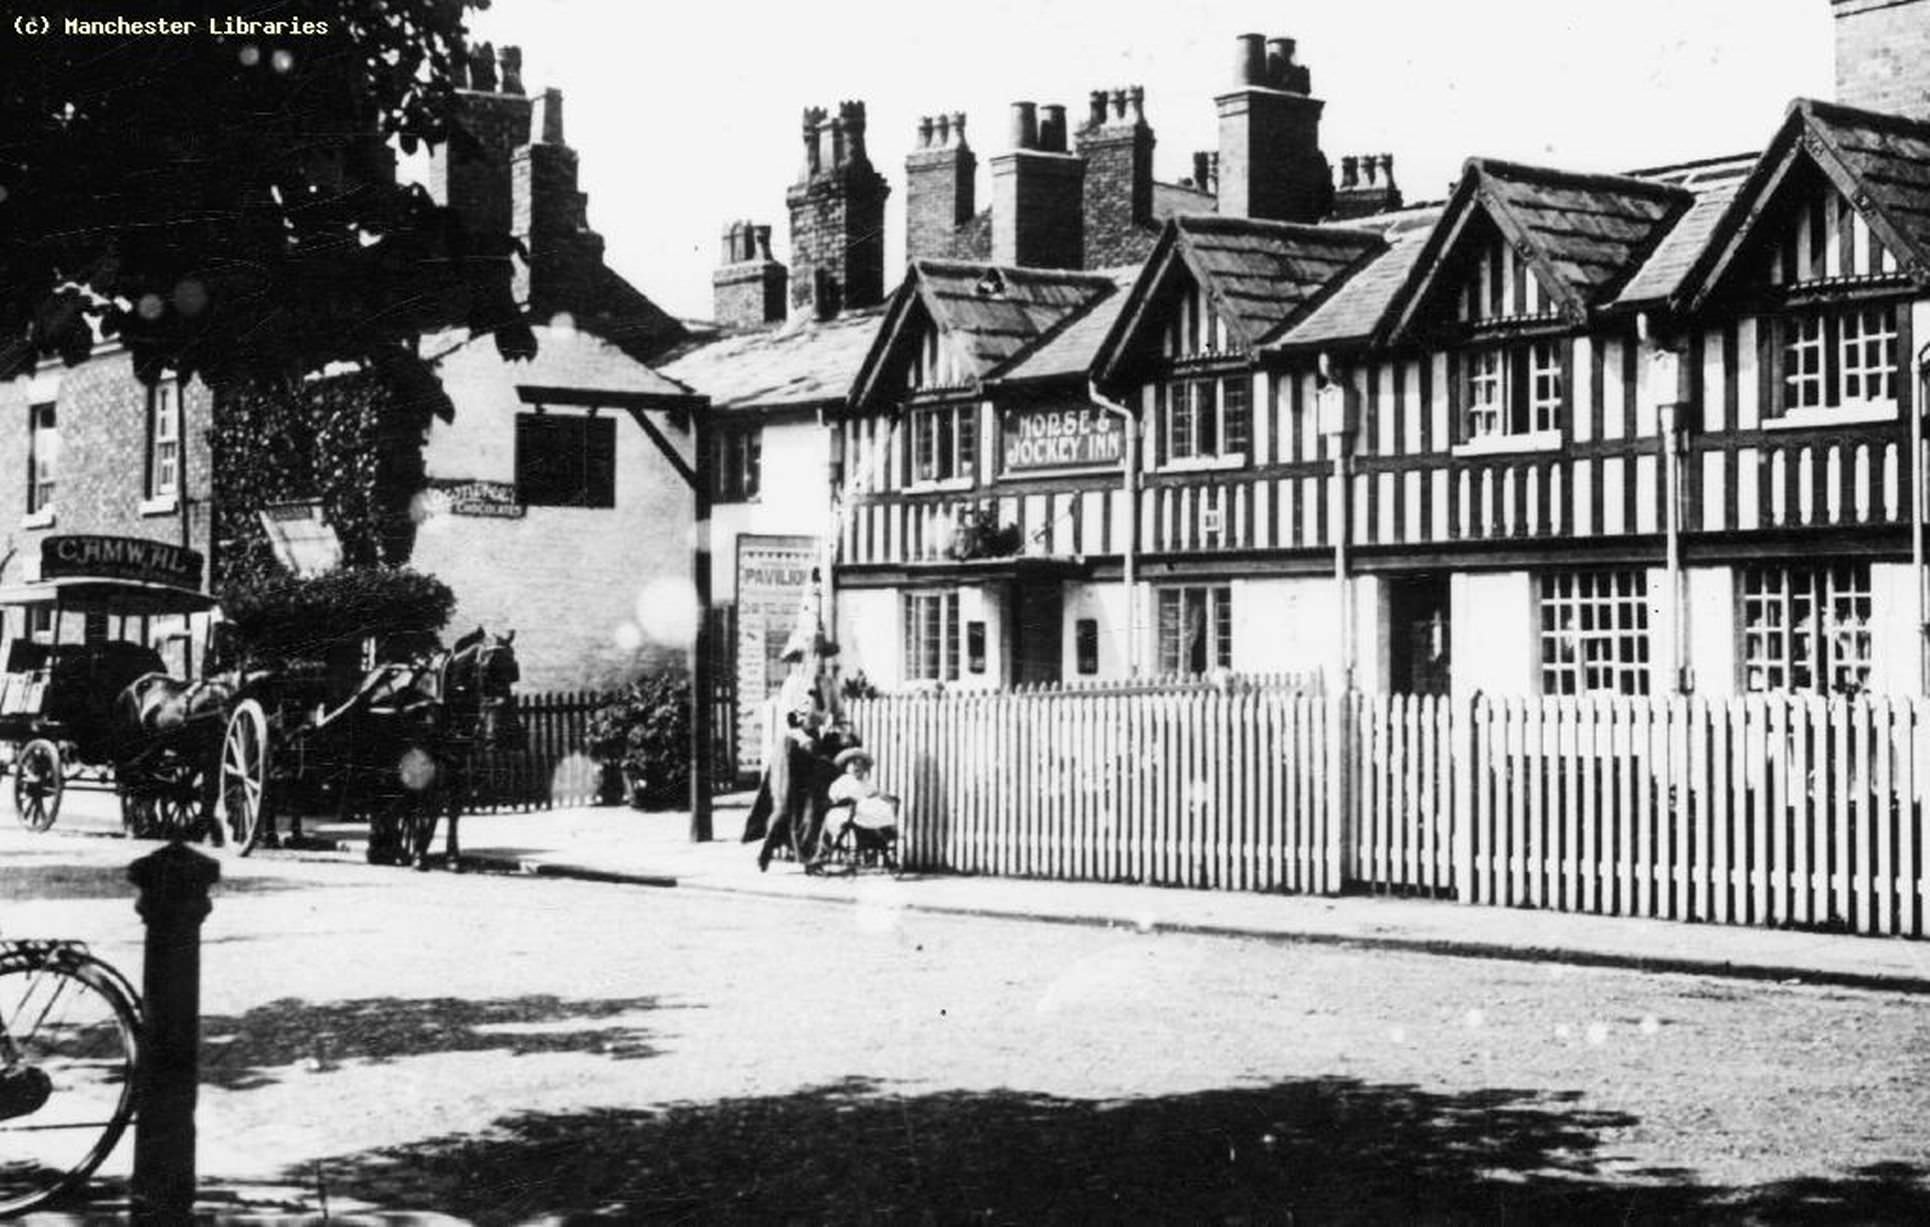 The Horse and Jockey Inn, Chorlton Green